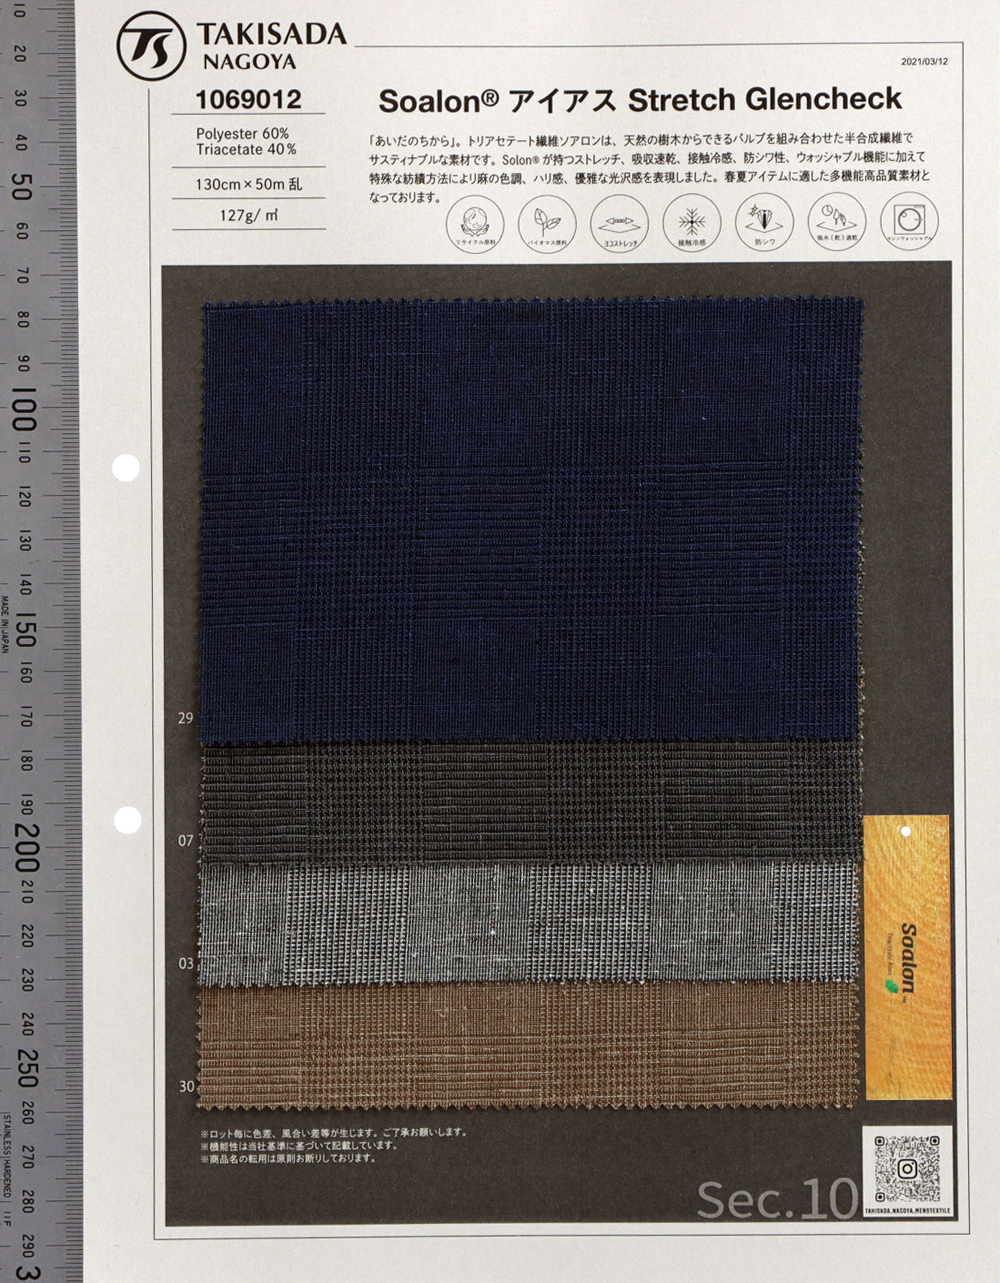 1069012 Soalon Triacetate Glen Check Stretch[Textile / Fabric] Takisada Nagoya